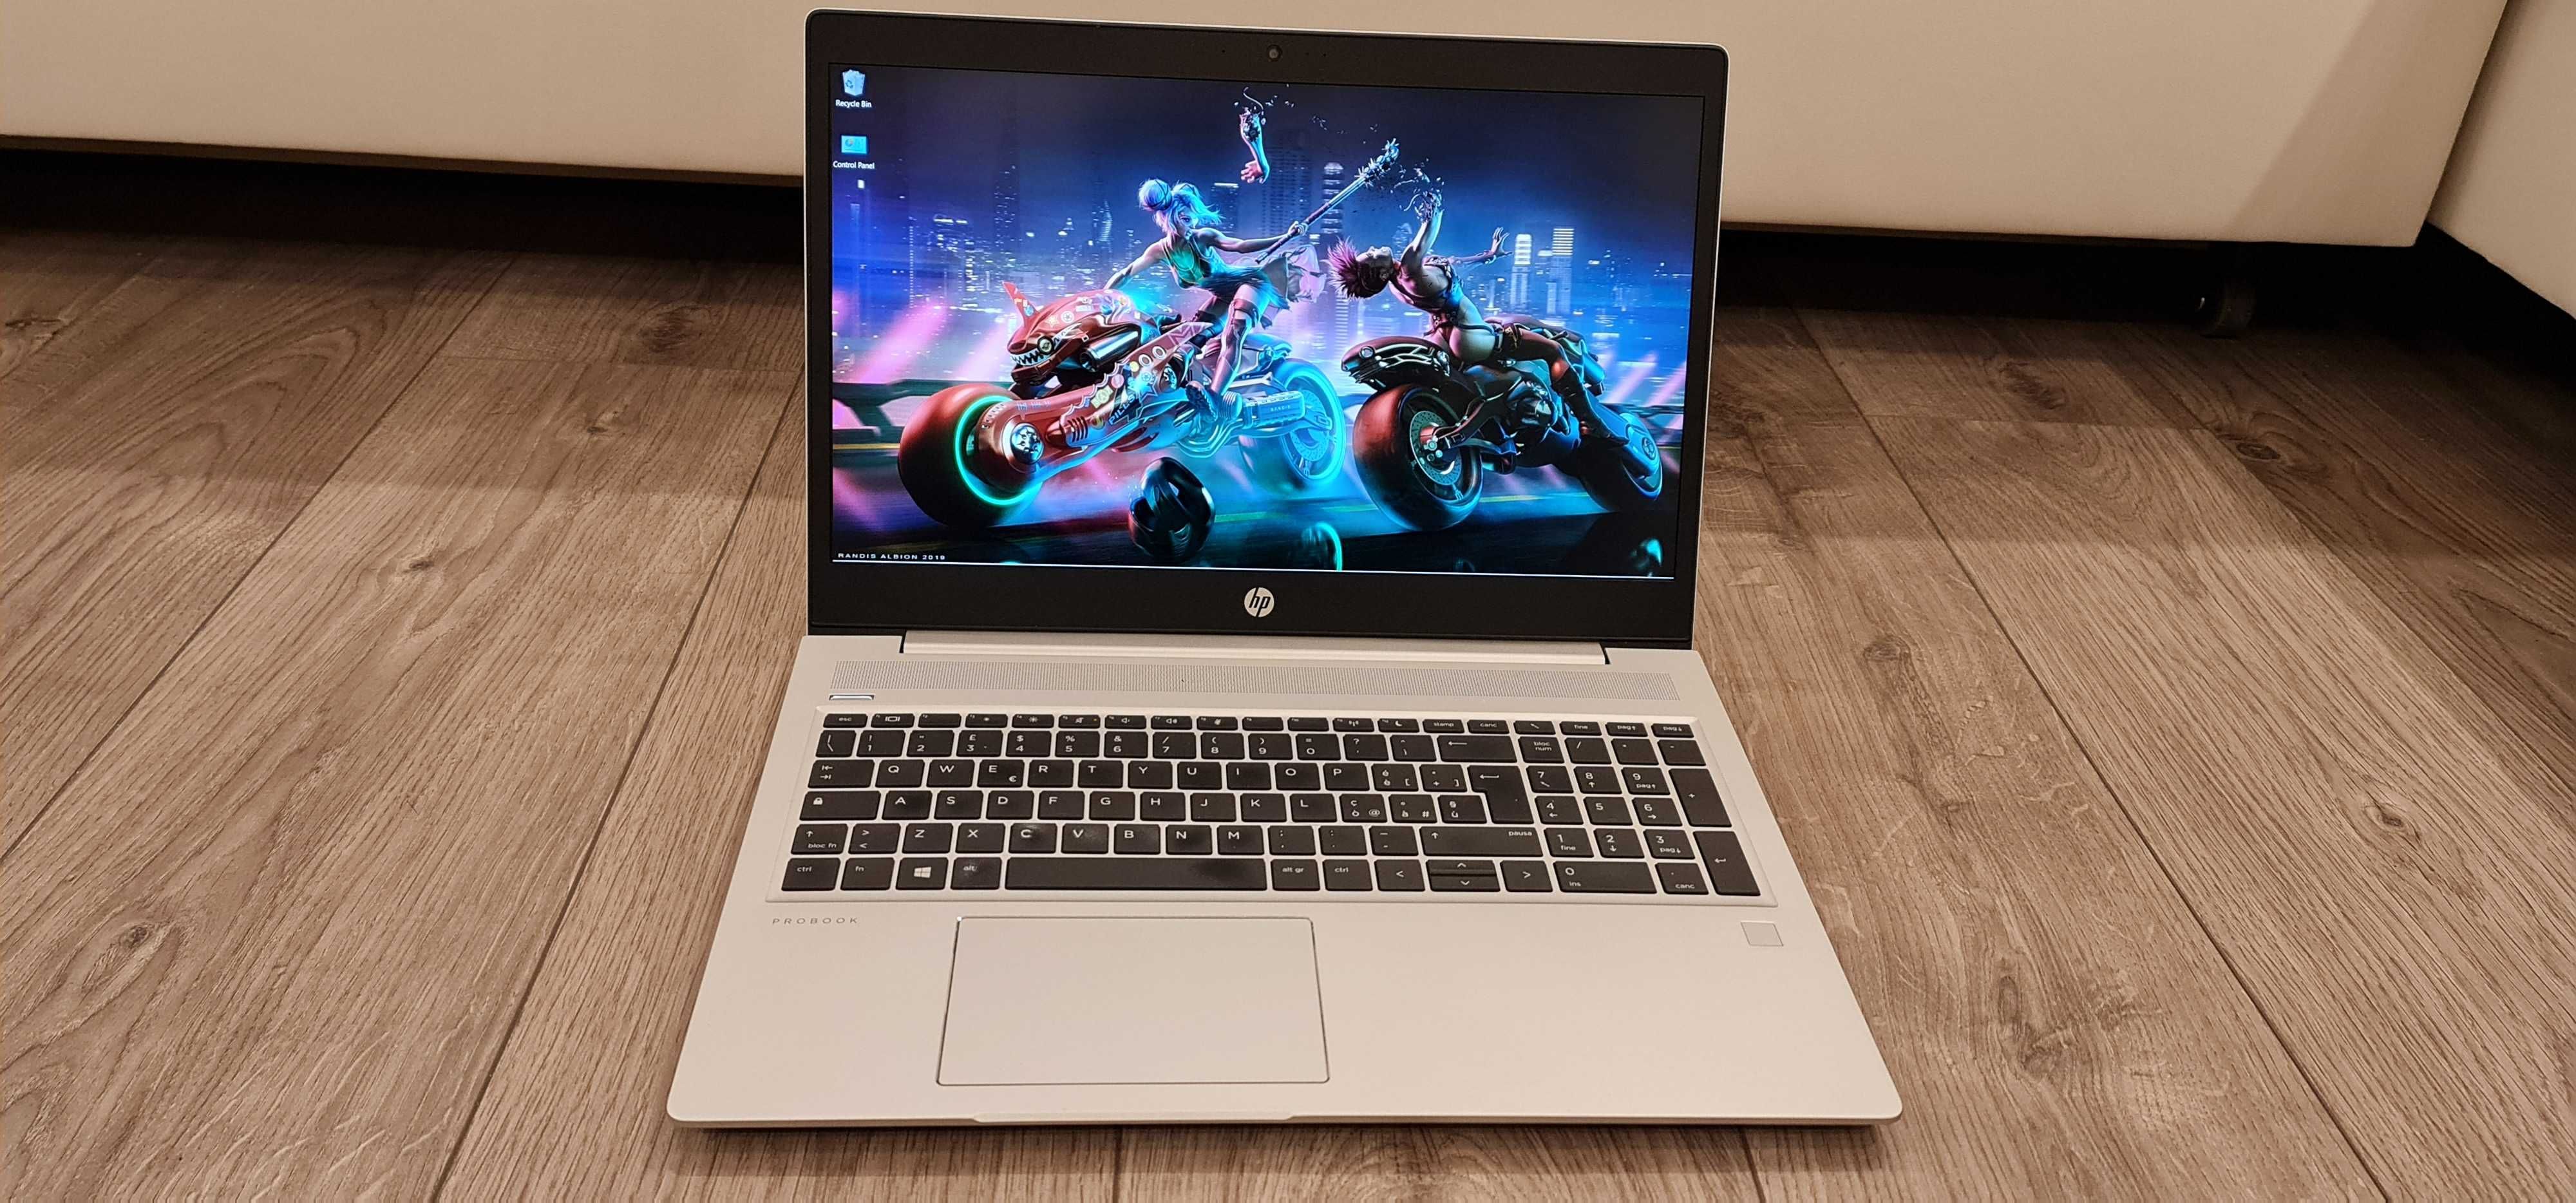 laptop performant HP ,intel core i7-8550, video 4 GB nvidia, 15,6 inch